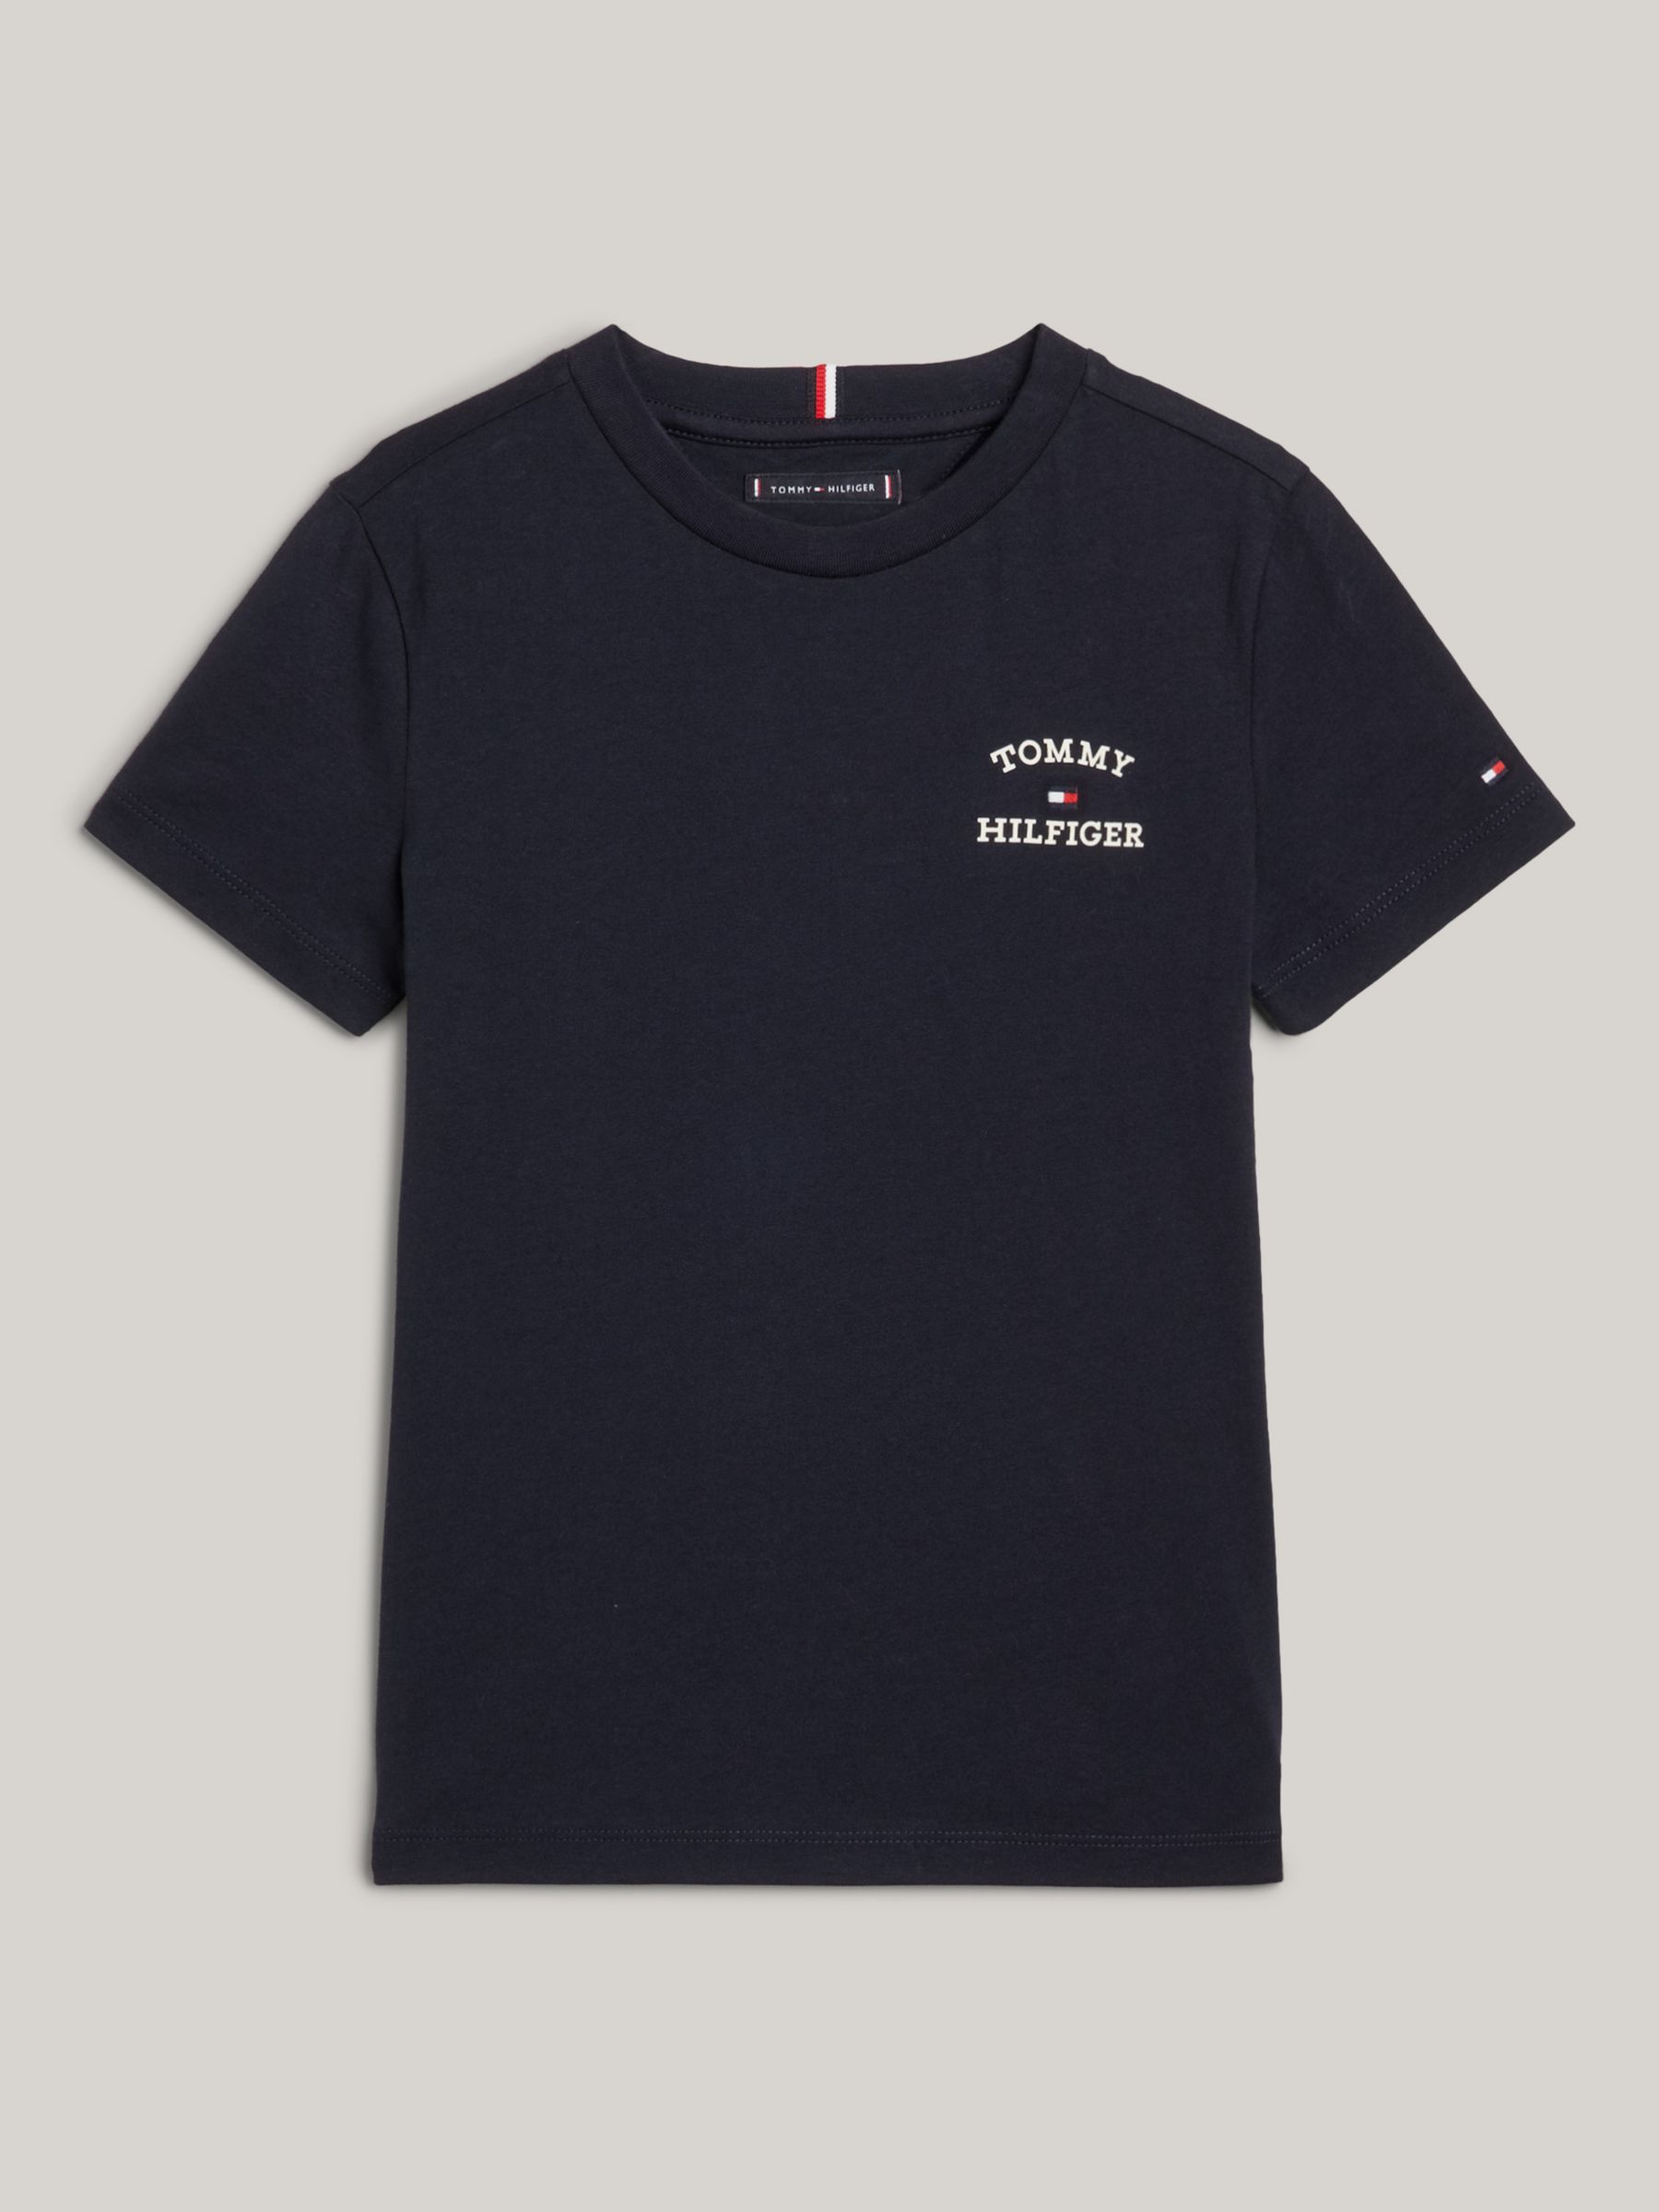 Tommy Hilfiger Kids' Chest Logo T-Shirt, Desert Sky, 10 years